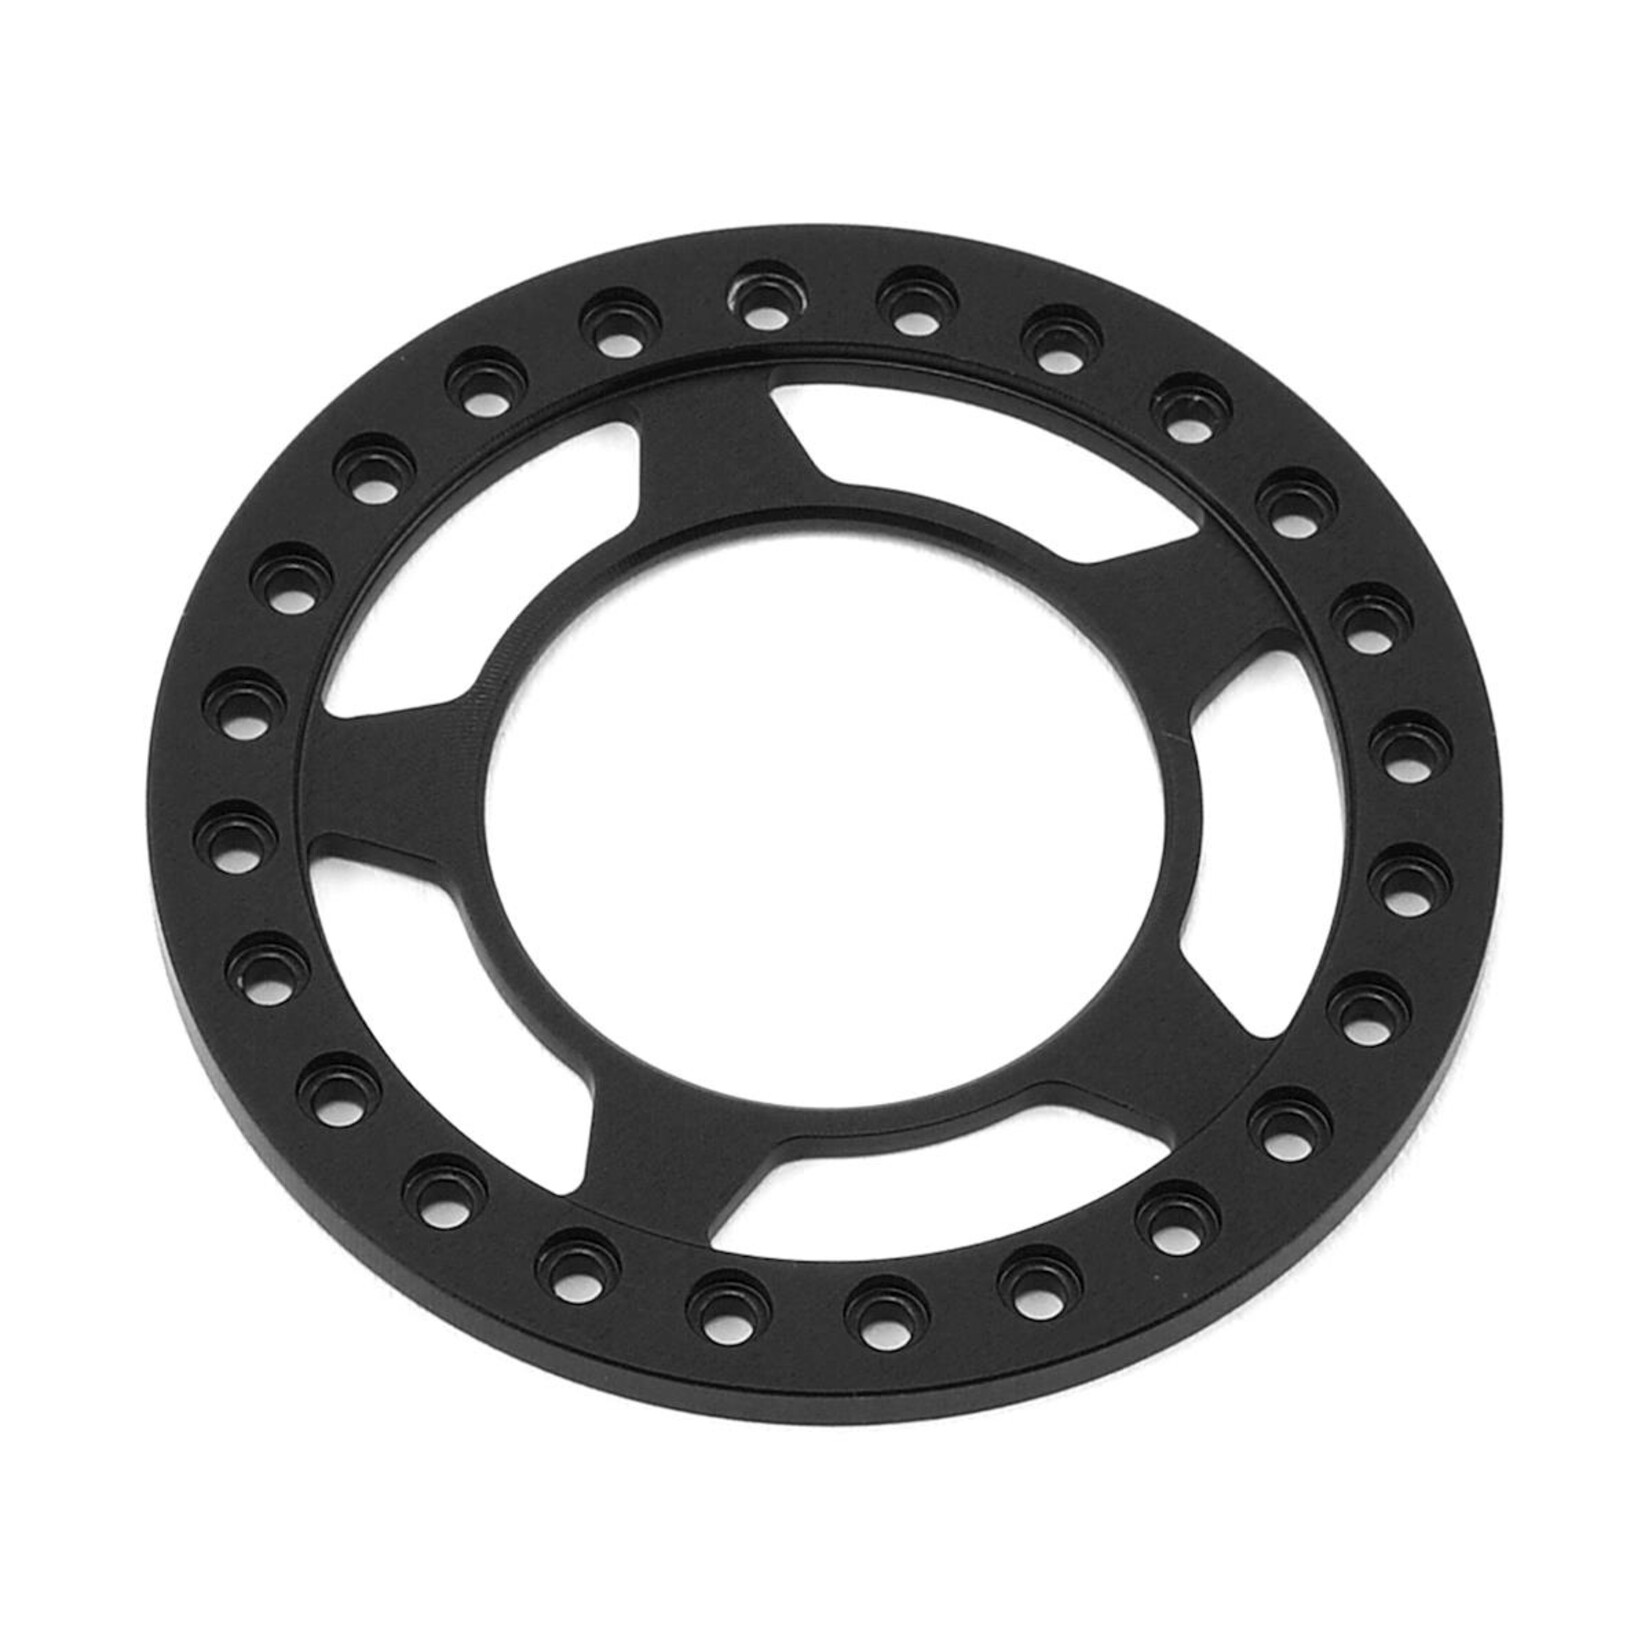 Vanquish Products Vanquish Products Spyder 1.9" Beadlock Ring (Black) #VPS05142